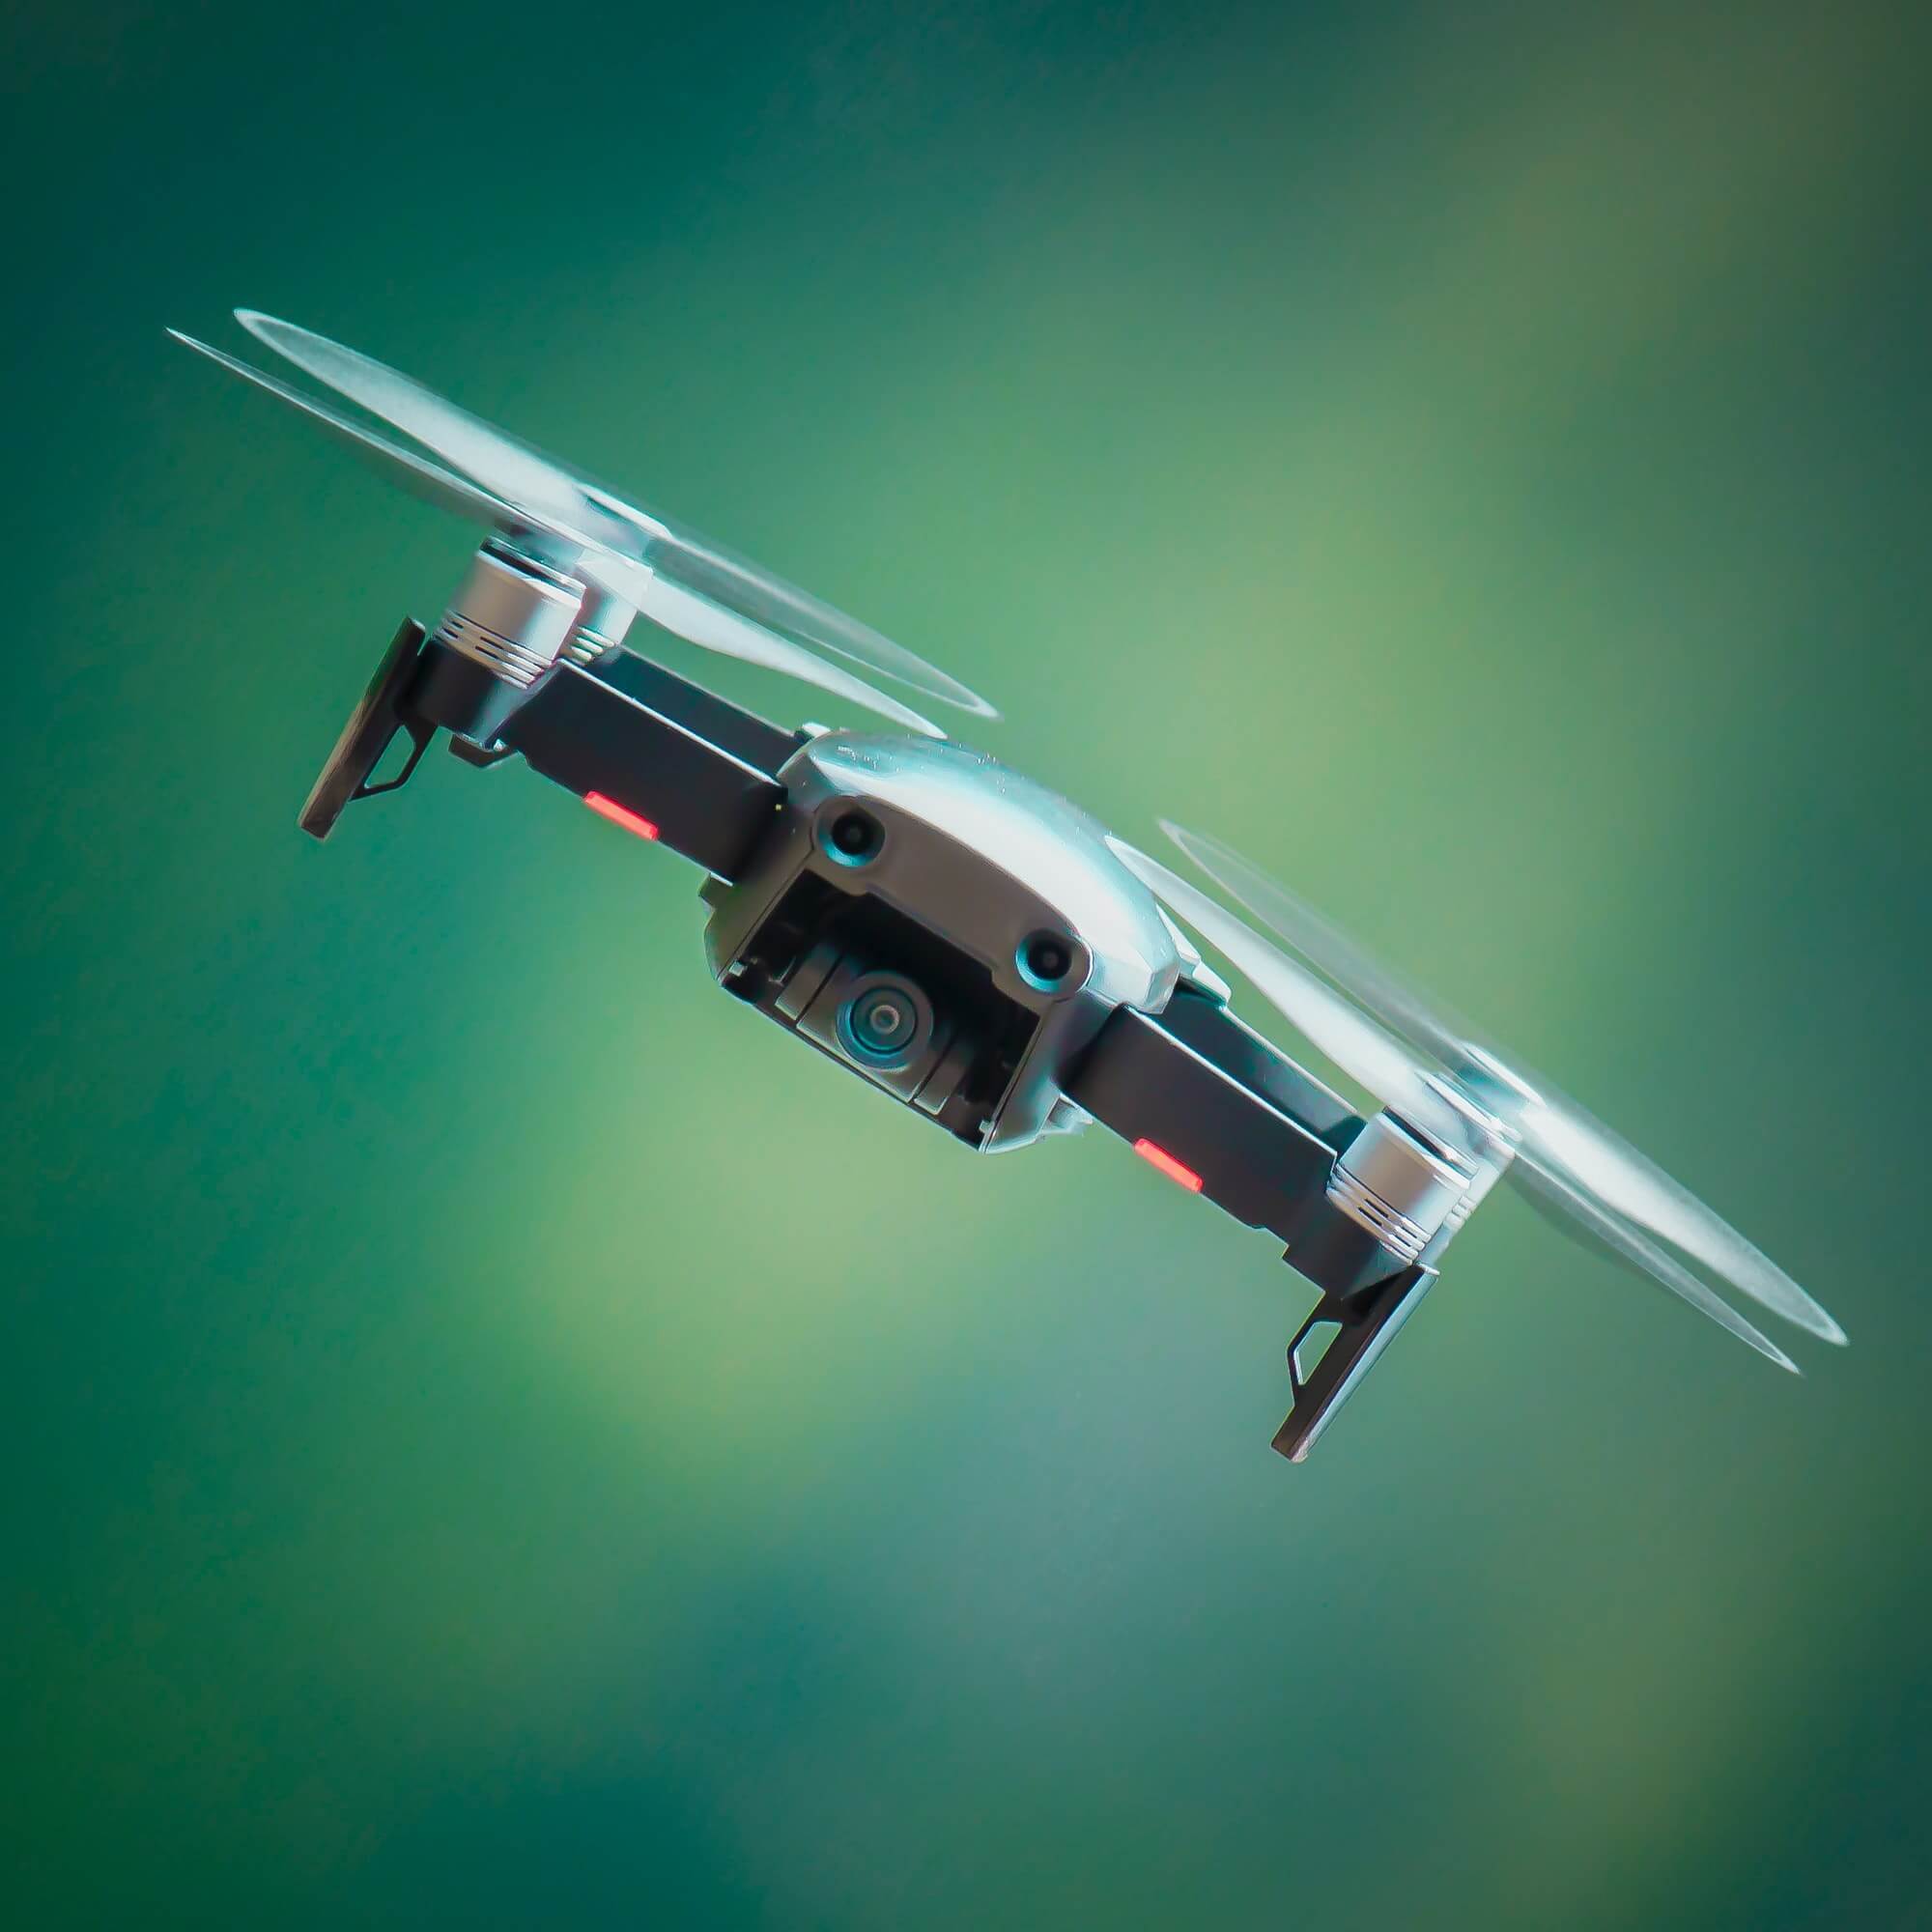 Drone Racing is Coming to Algorand (ALGO)